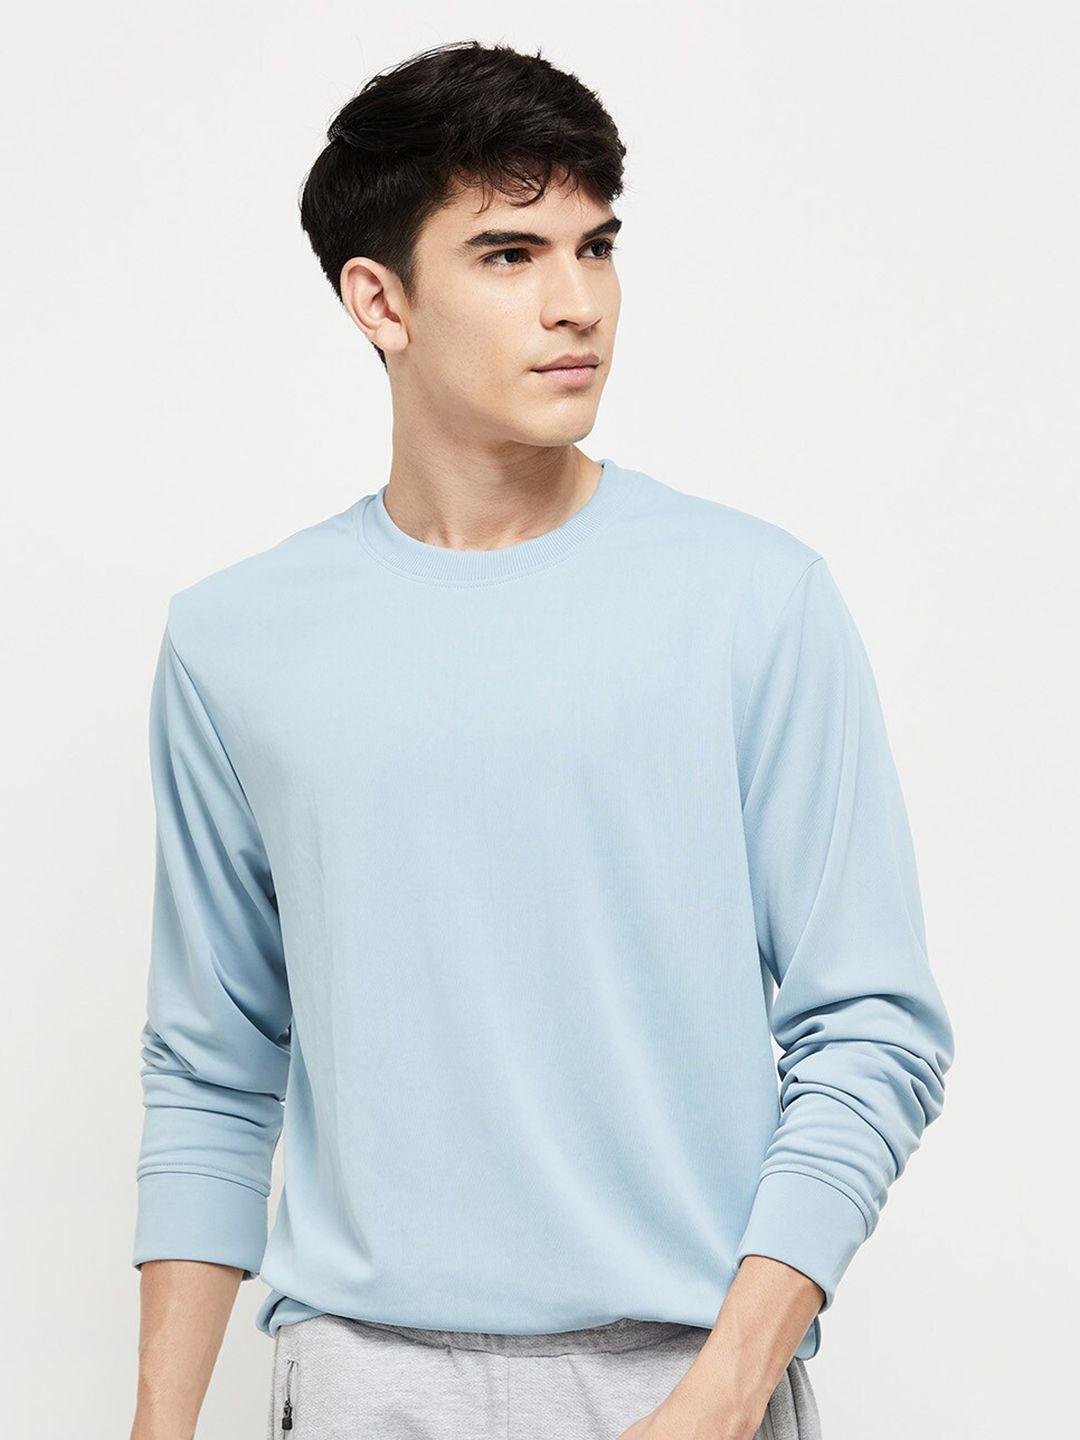 max men blue sweatshirt